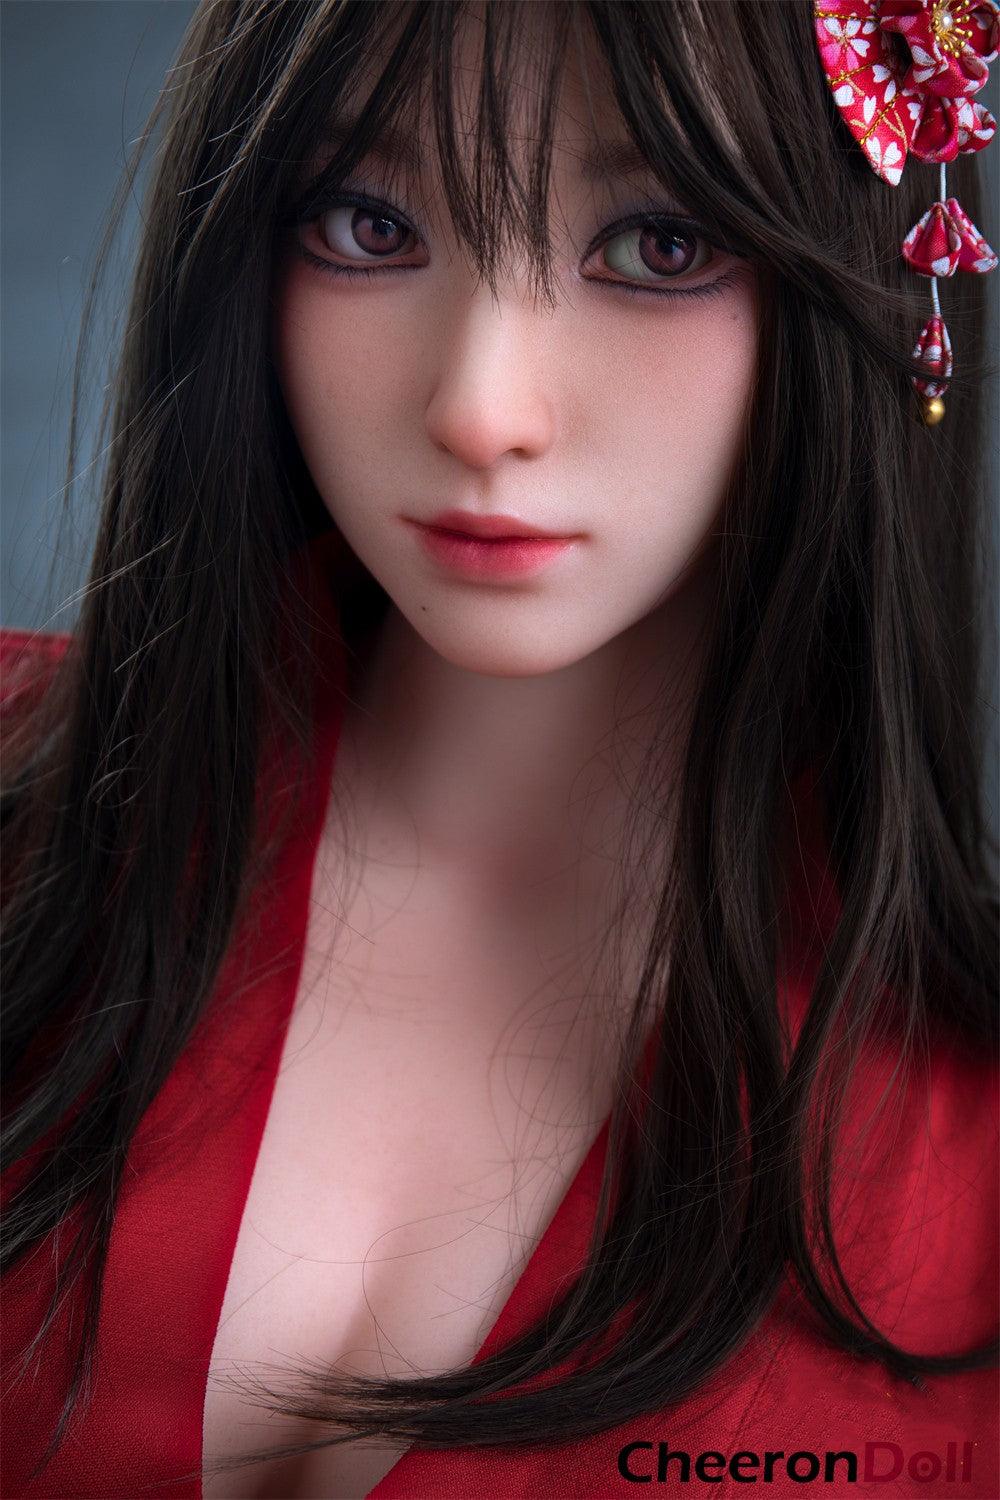 cheerondoll 164cm silicone geisha japanese sex doll s24 miyuki